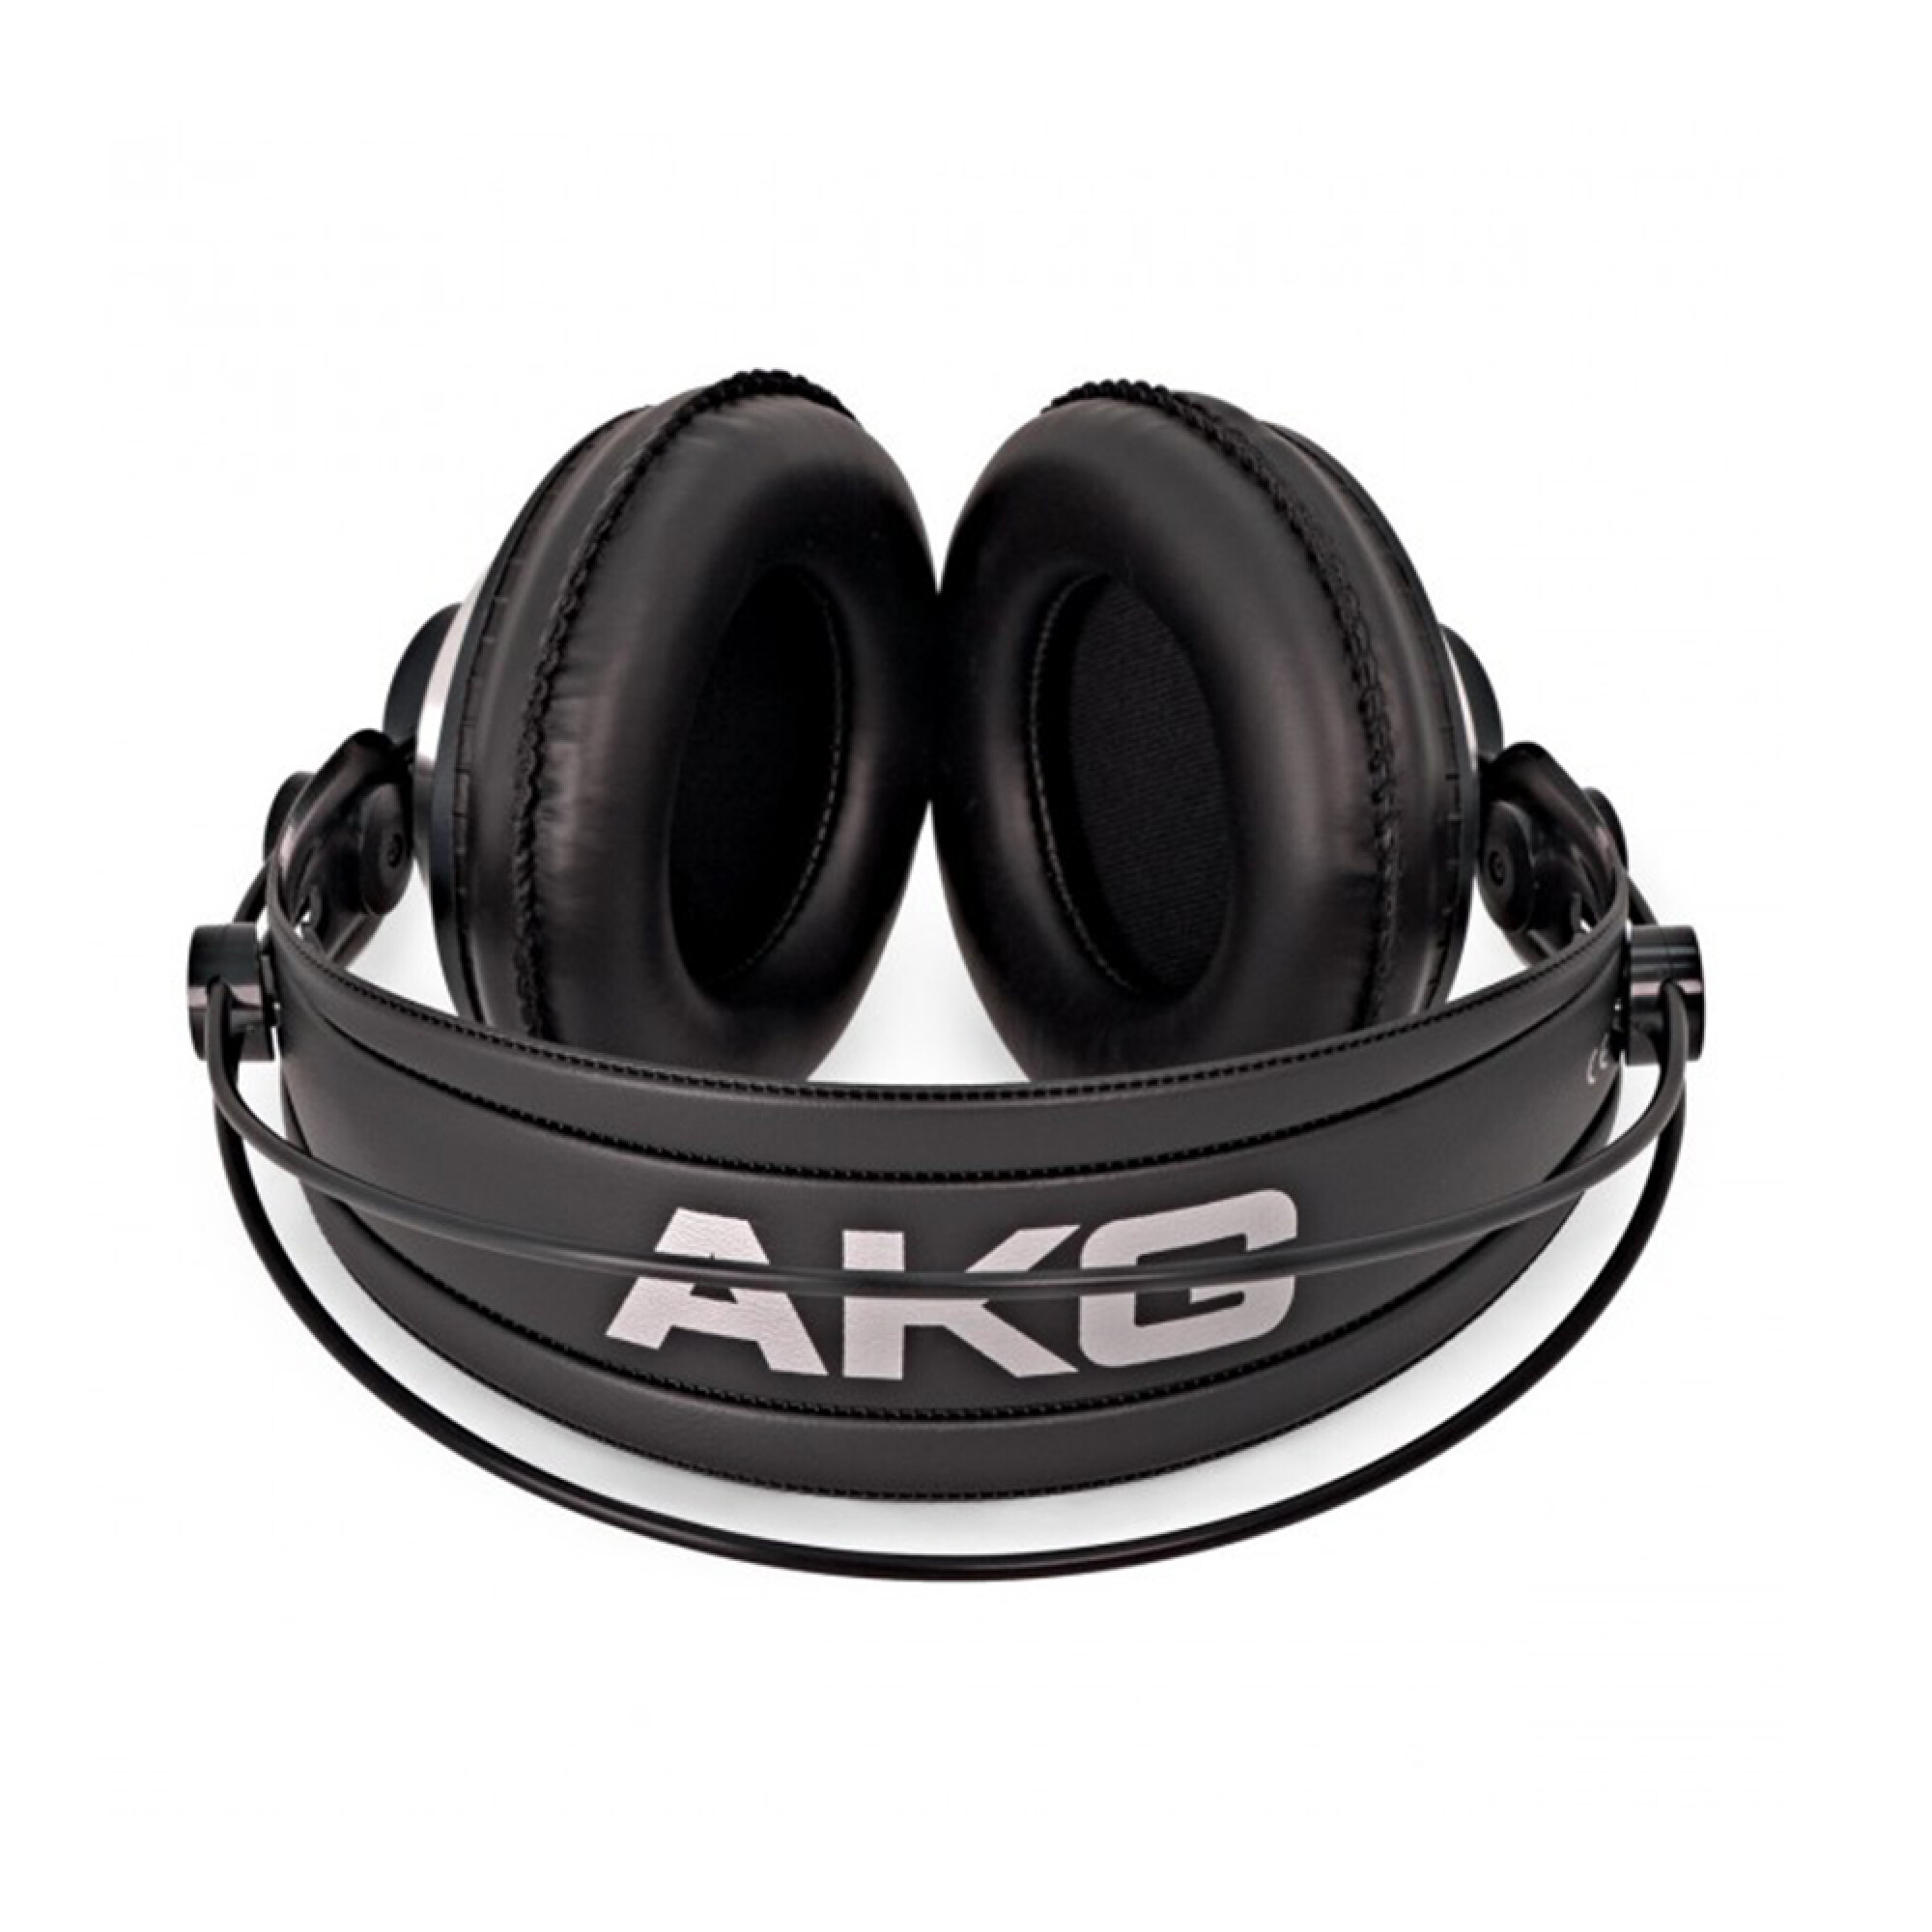 AKG K240 STUDIO Auriculares de estudio